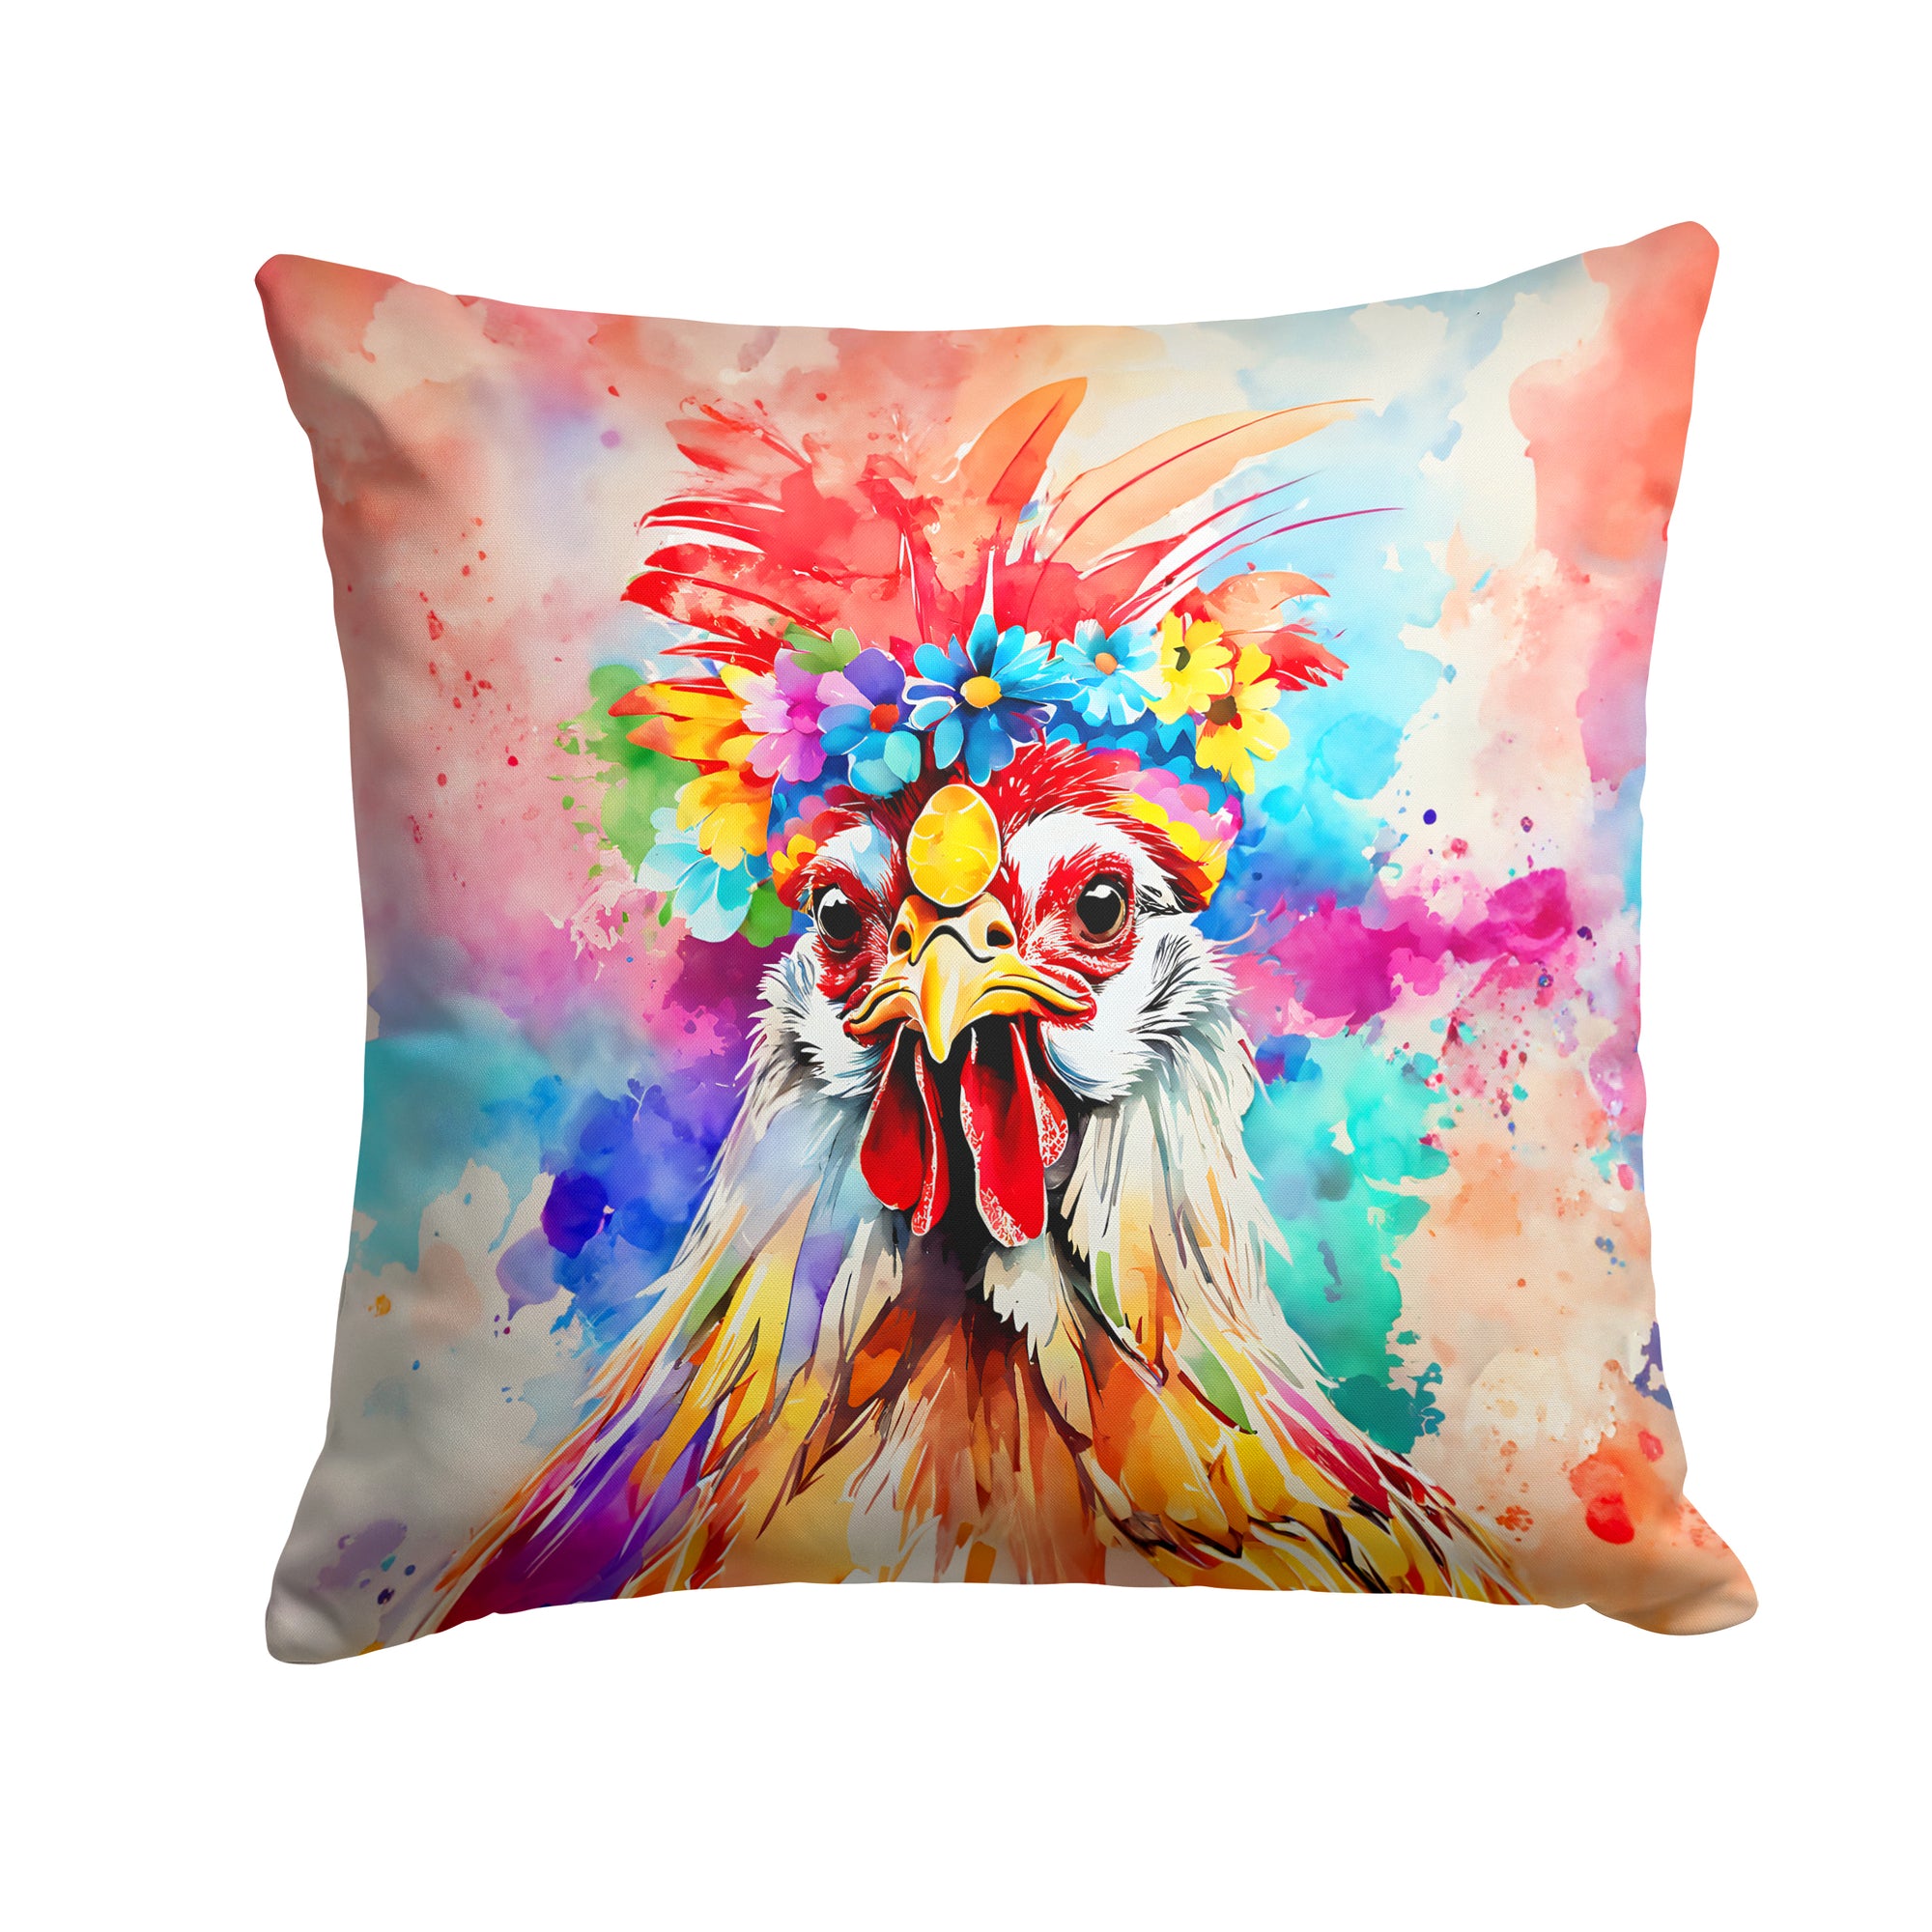 Buy this Hippie Animal Polish Poland Rooster Throw Pillow